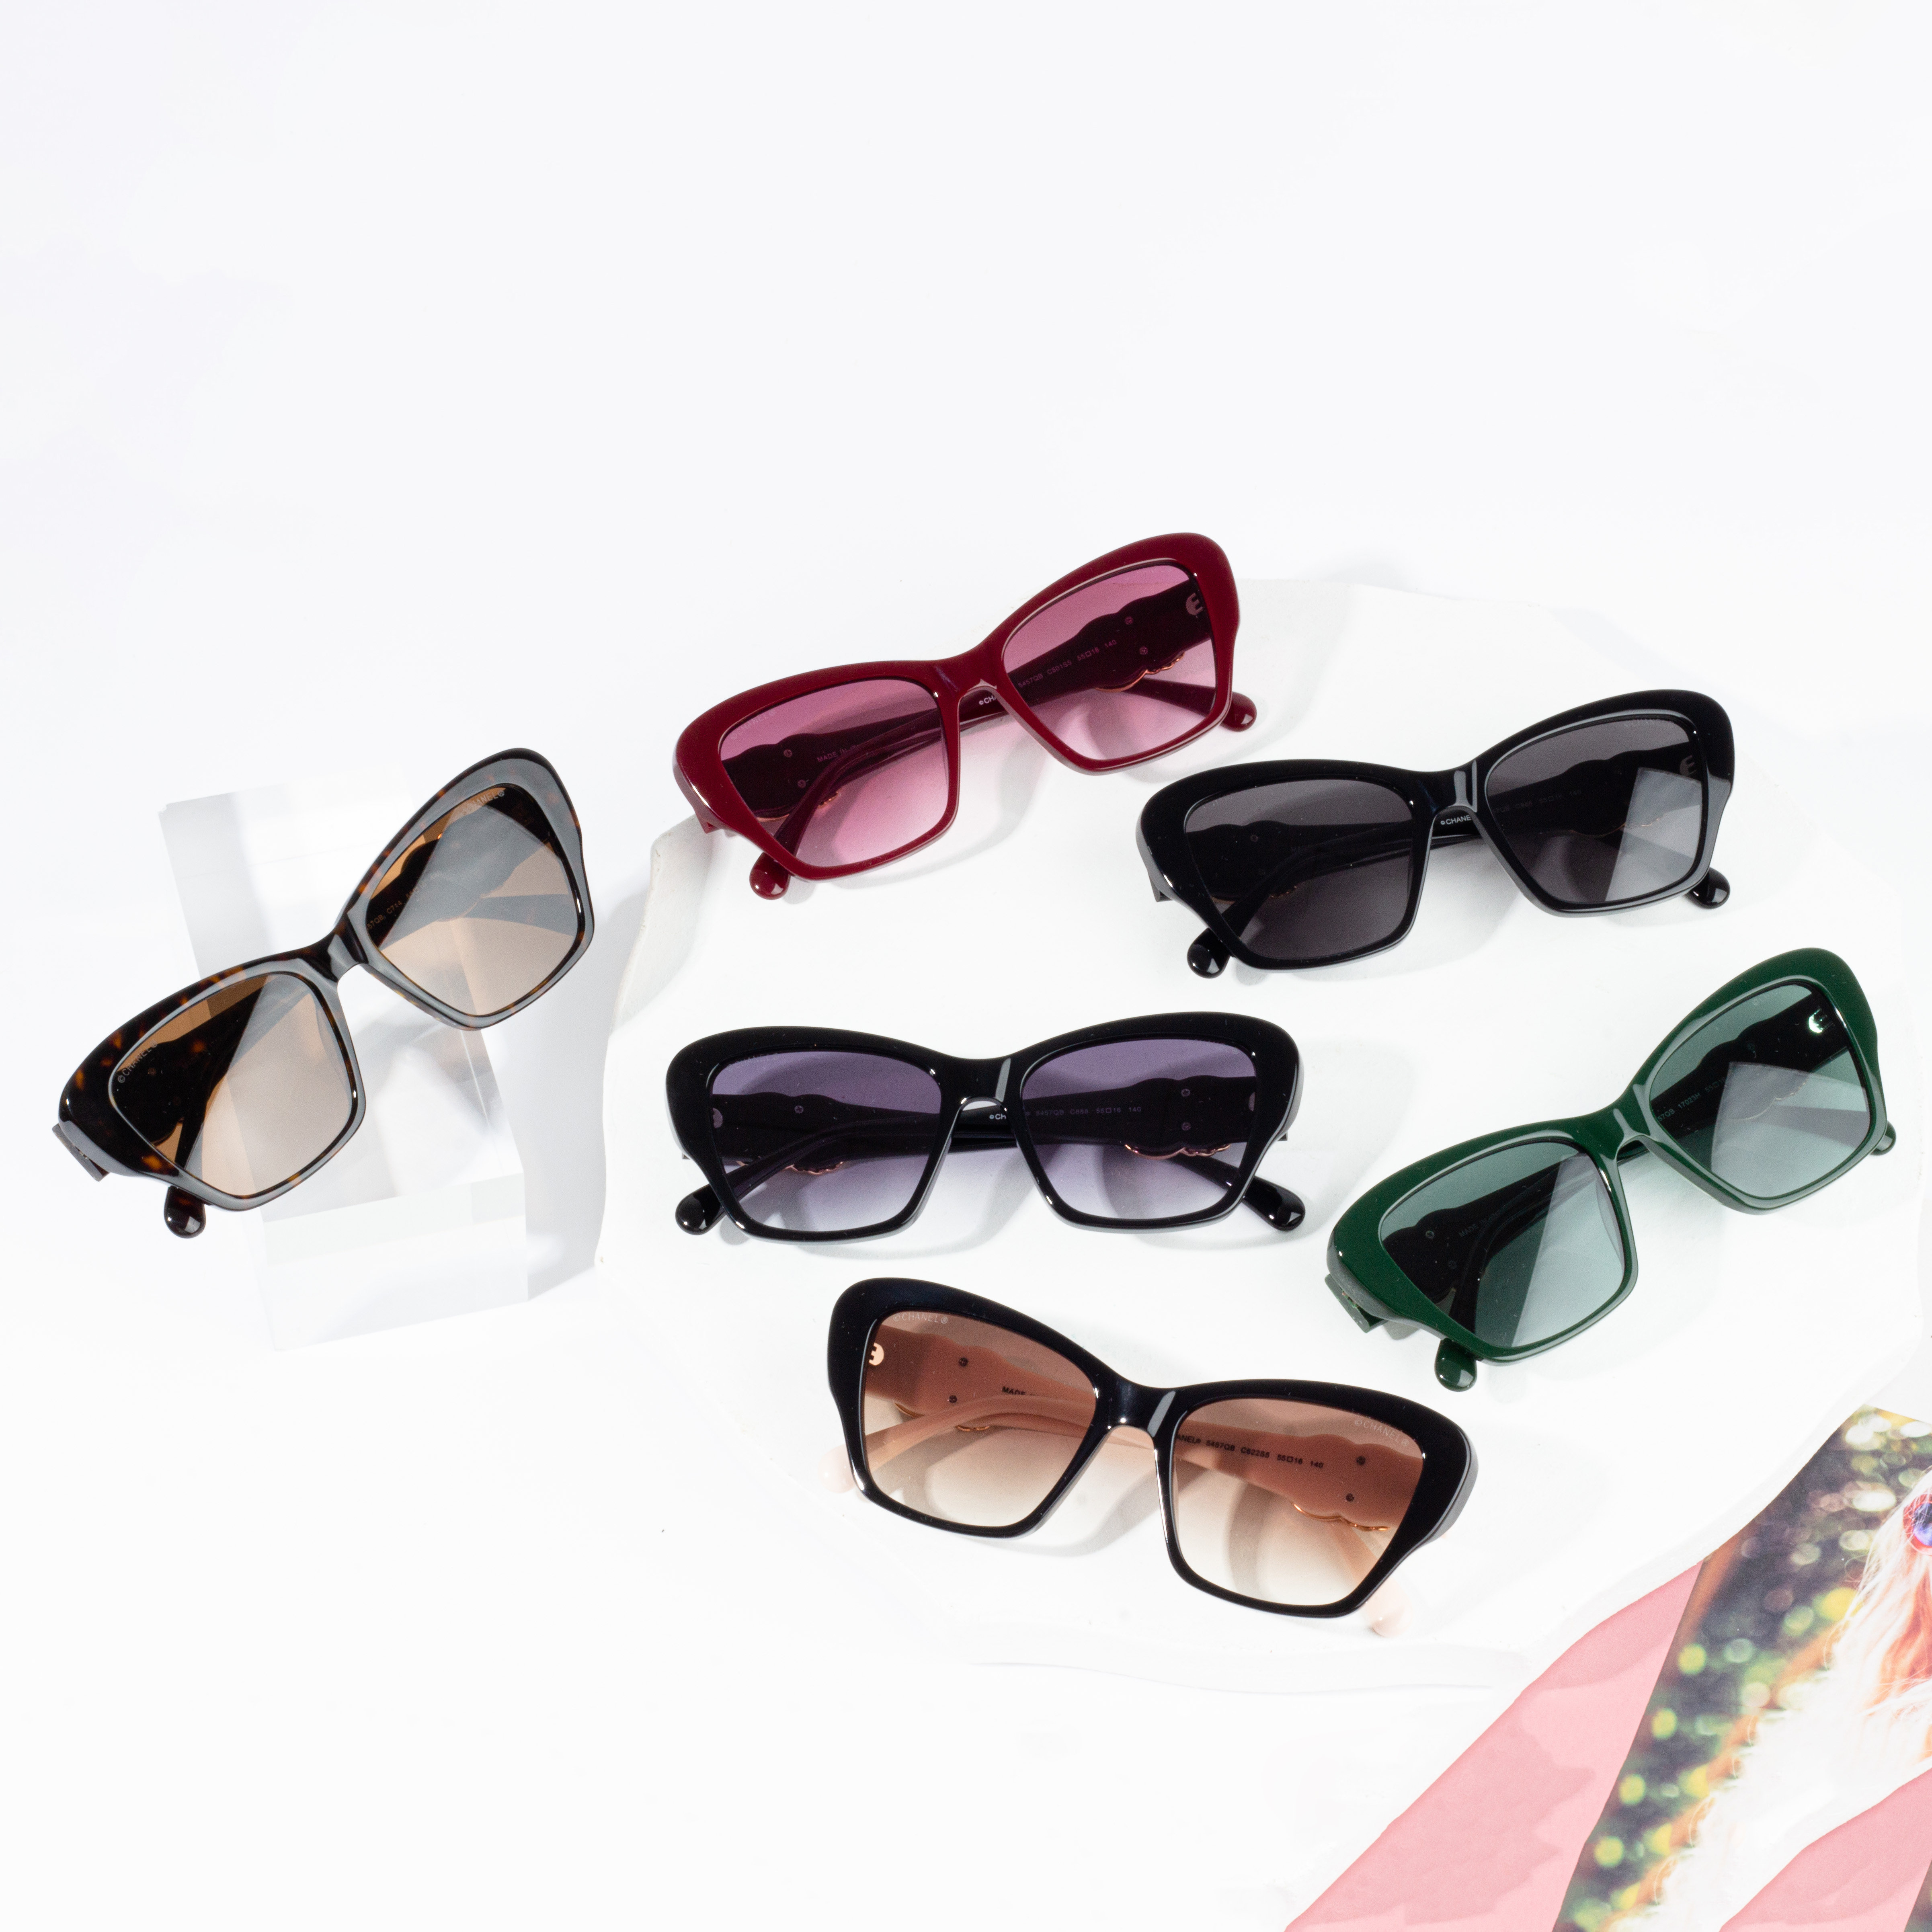 Chinese Professional Gucci Mens Sunglasses - UV 400 Protection Lady Sunglasses Promotion – HJ EYEWEAR